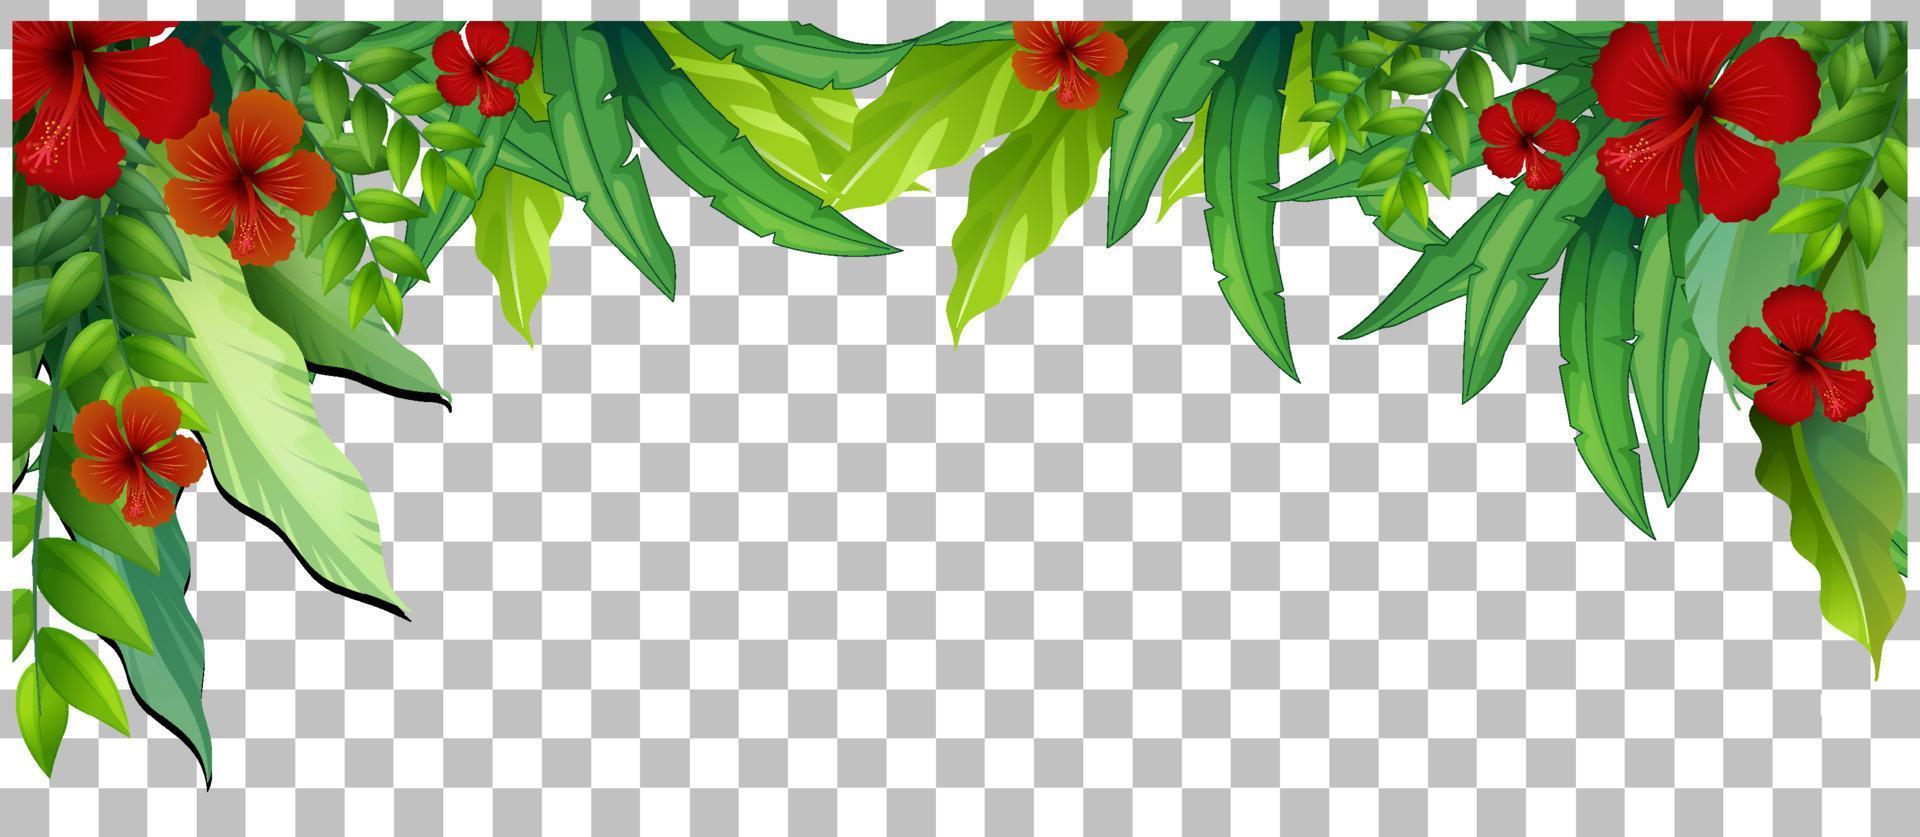 Green nature leaves frame grid background vector